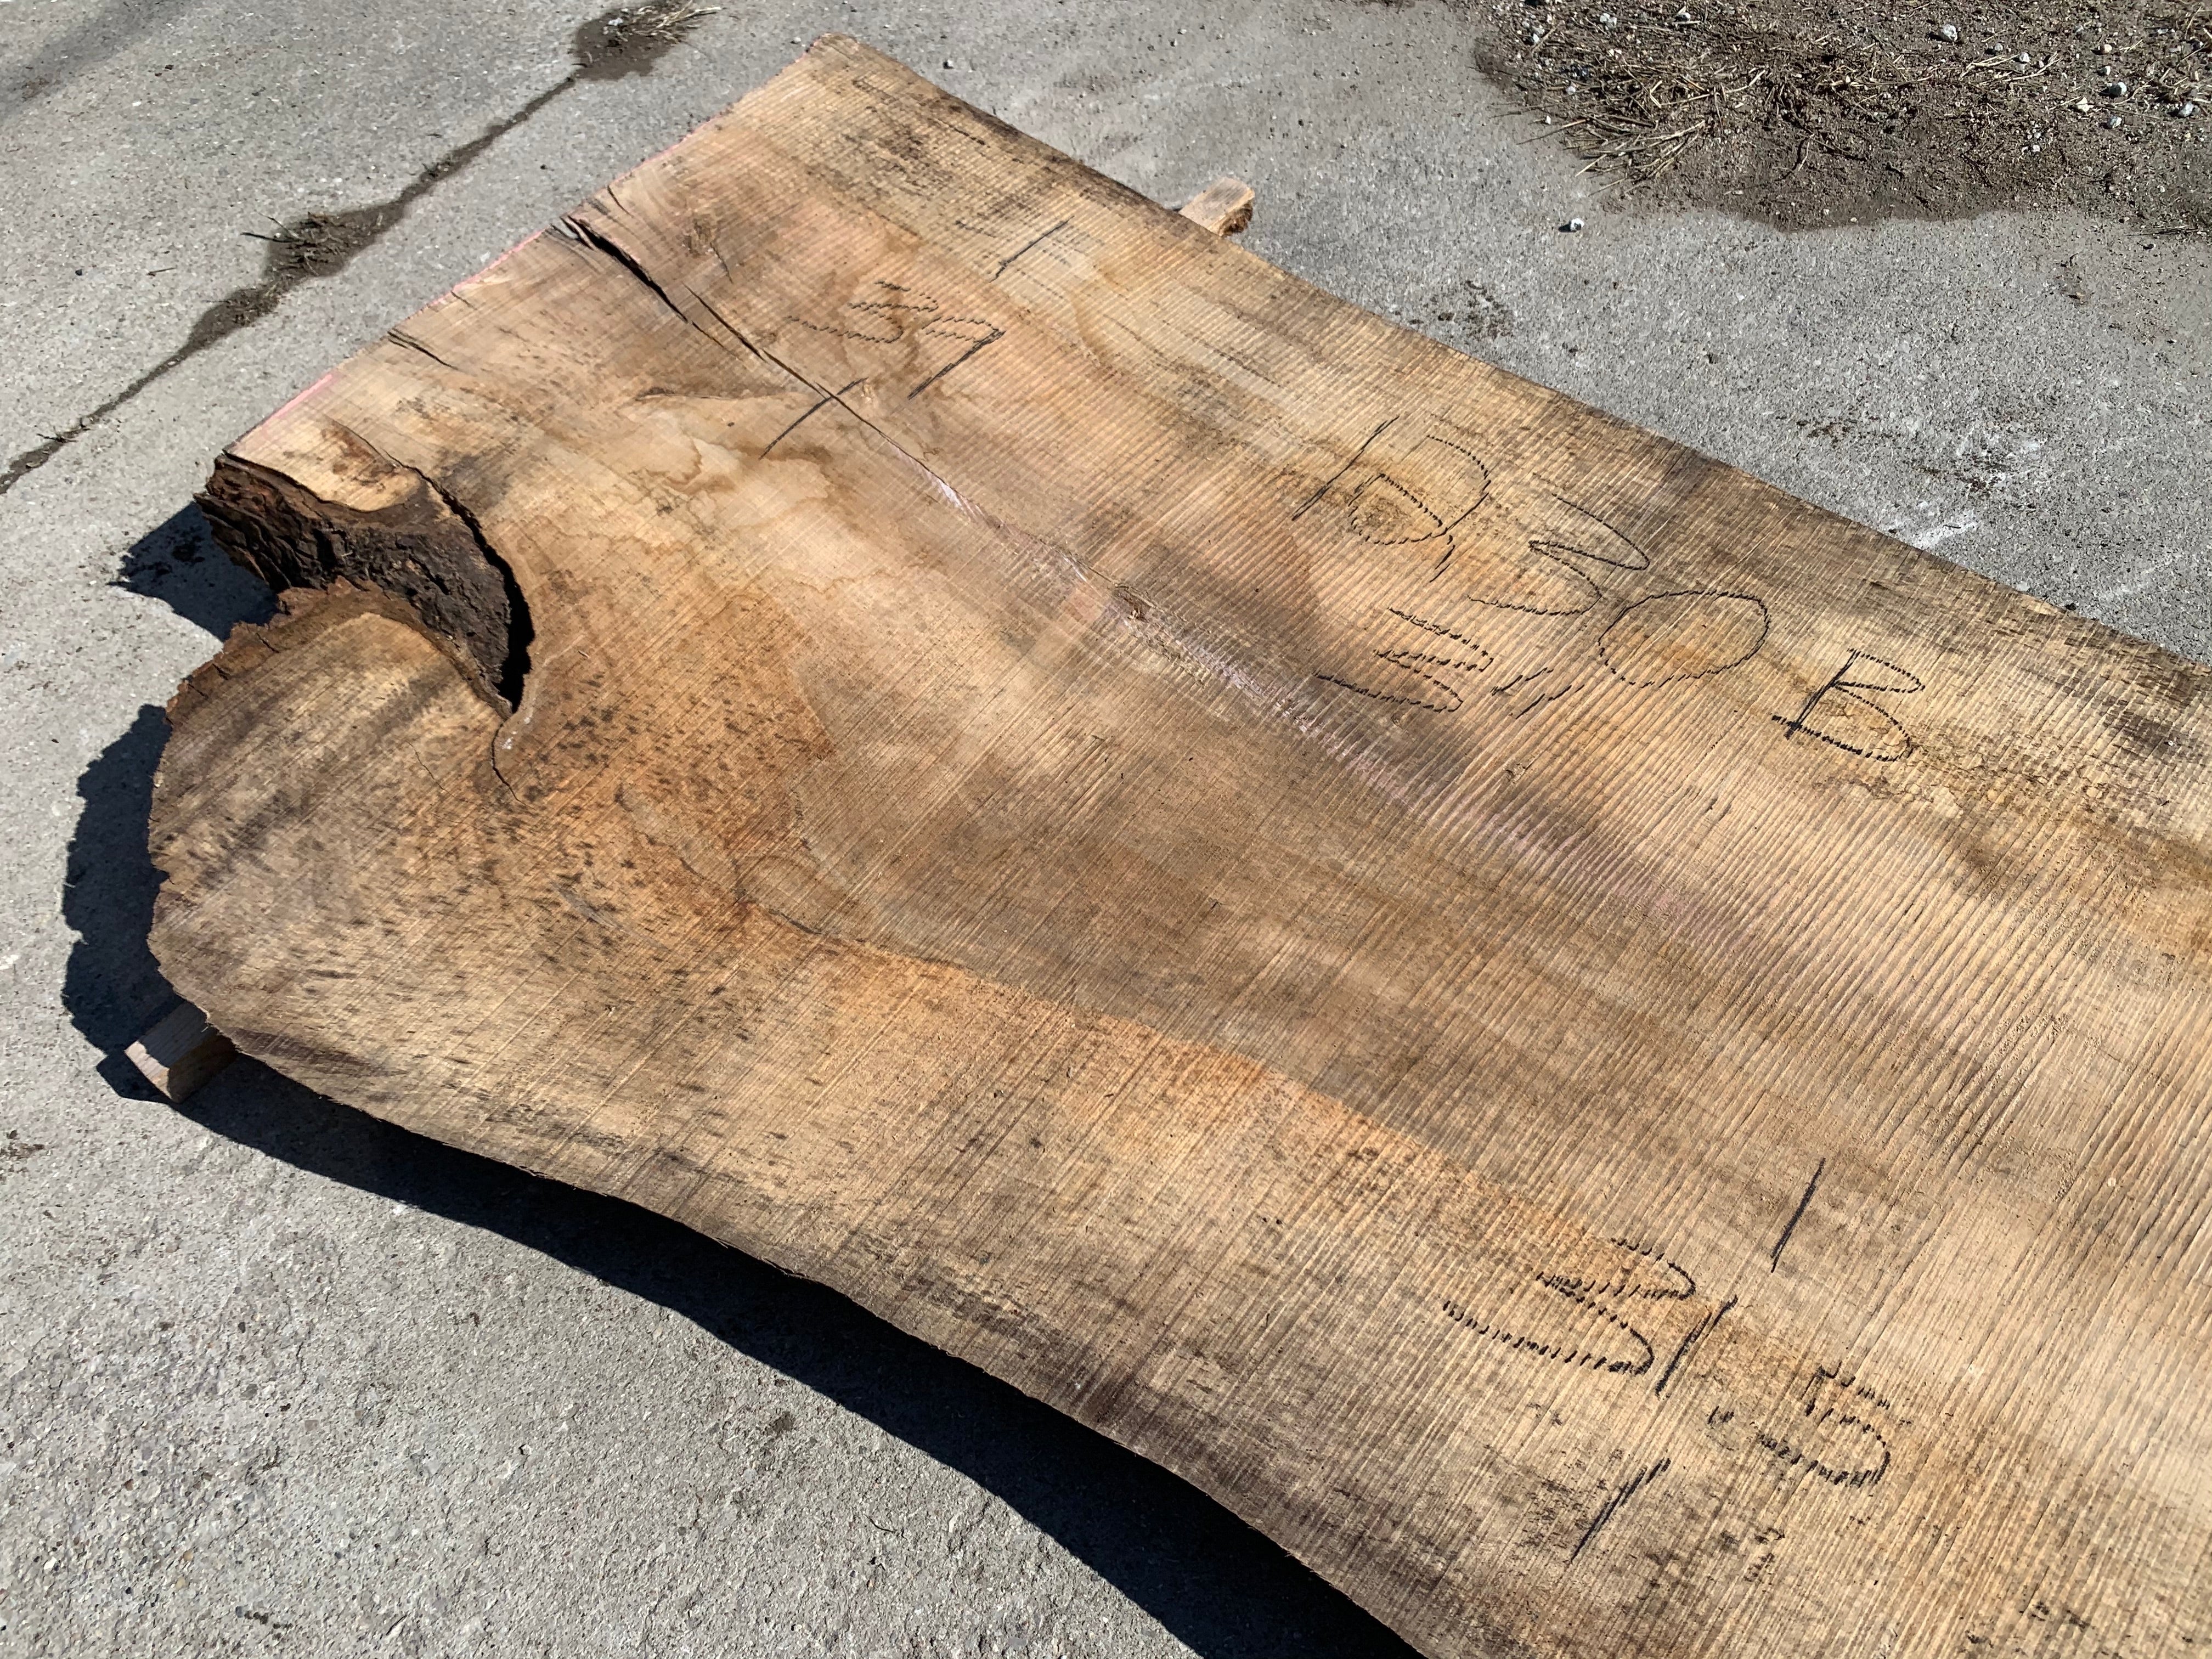 Spalted Soft Maple Slab #1230. Sawmill, mill, lumber, live edge slabs, mantles, floating shelves, wood, logs, log buyer